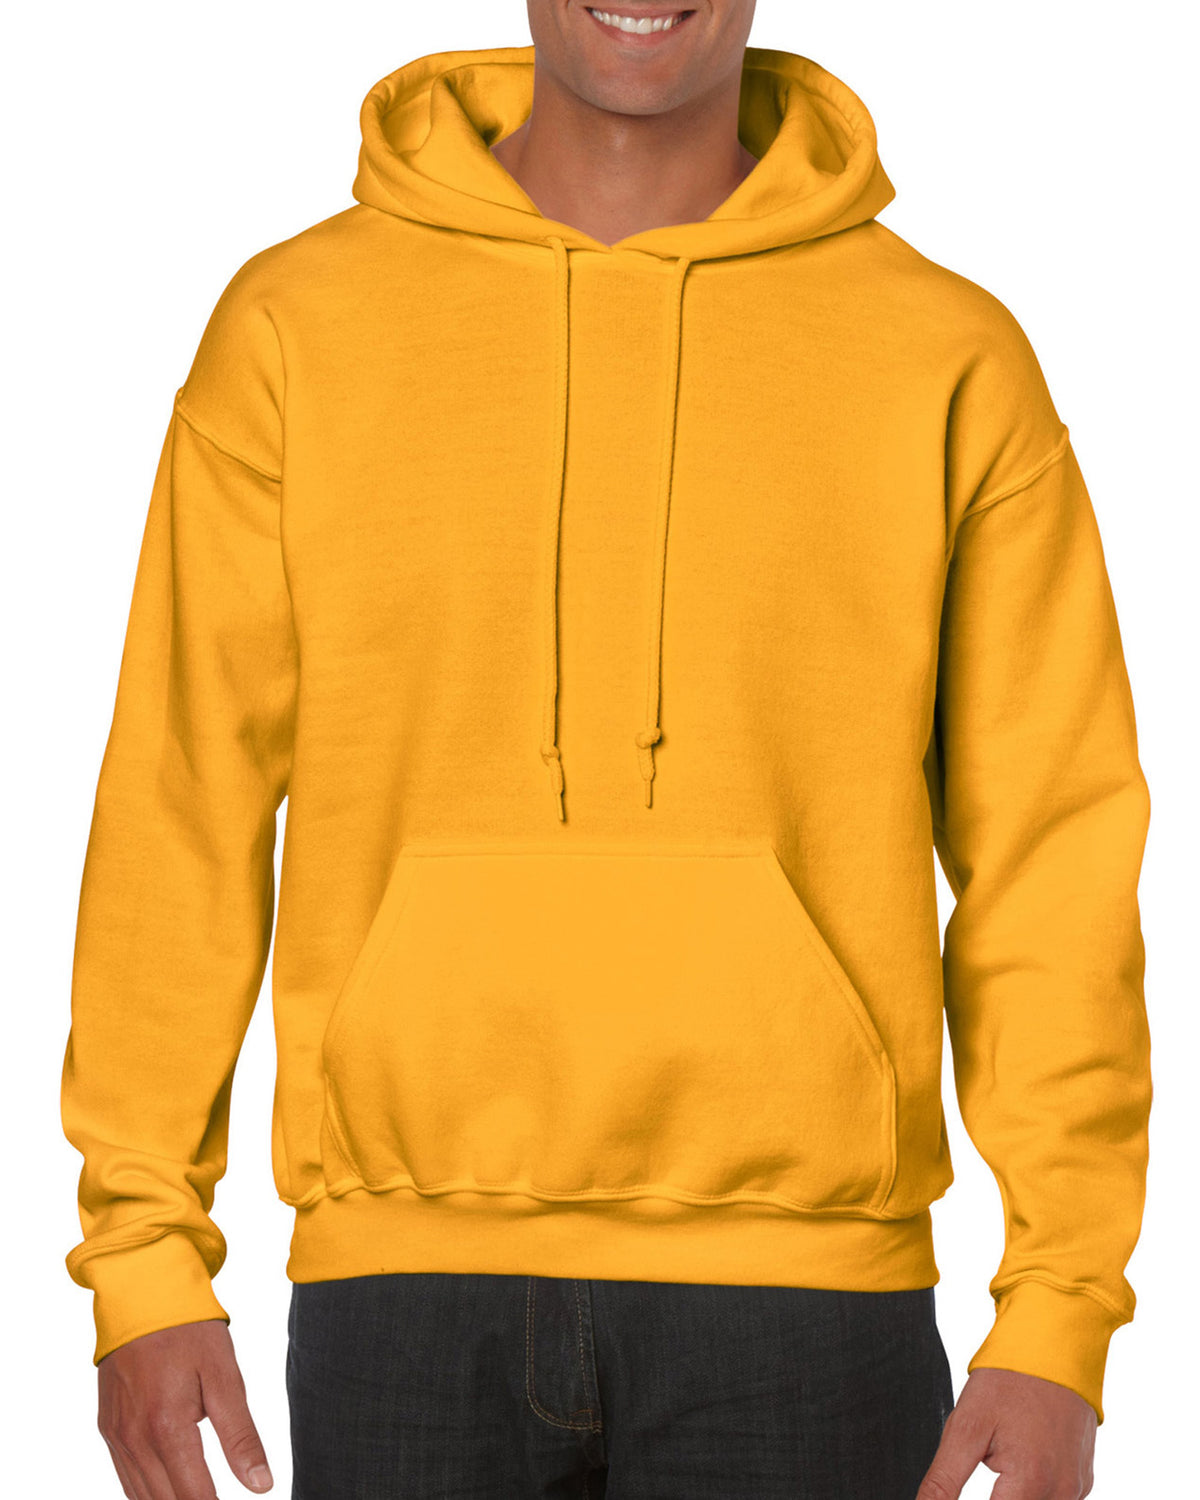 Gold  Heavy Blend Adult Hooded Sweatshirt